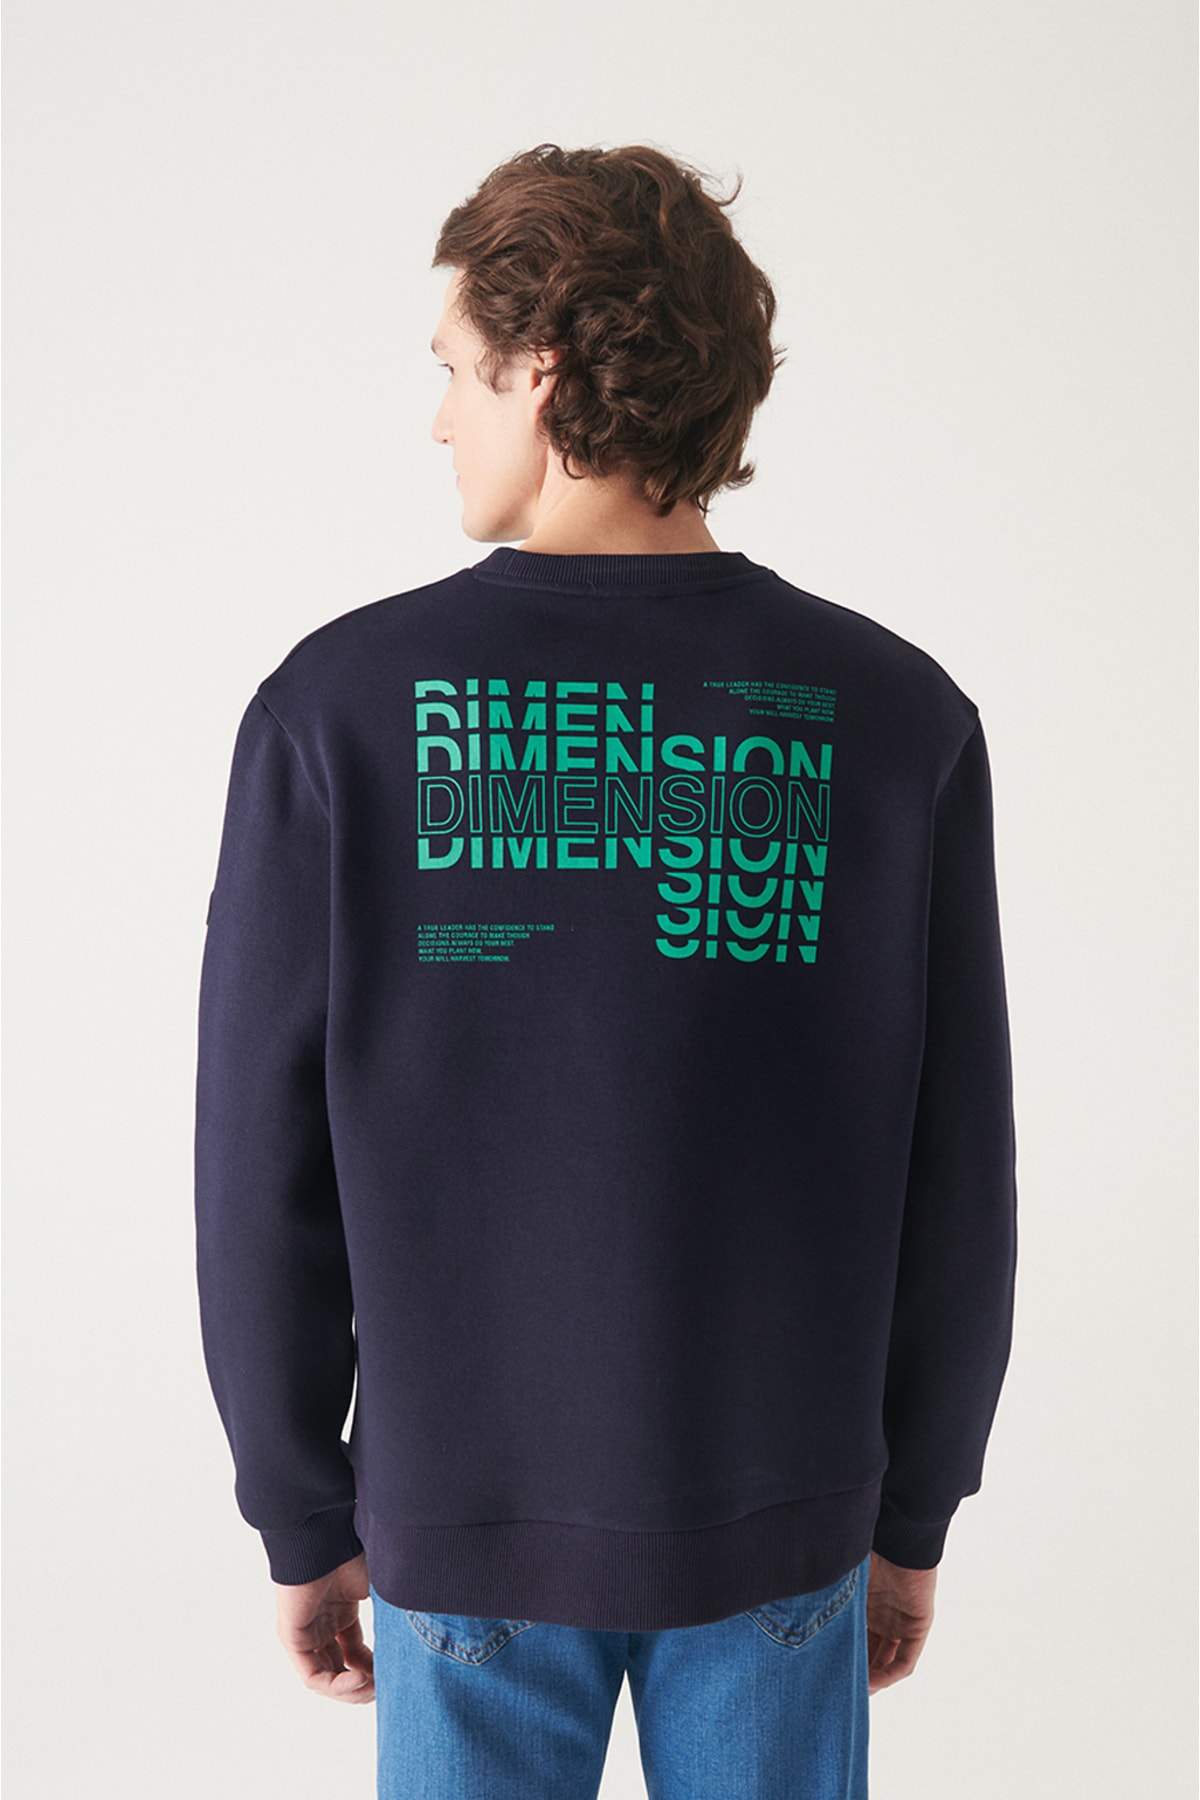 mens-navy-blue-crew-neck-3-thread-back-printed-sweatshirt-a22y1108